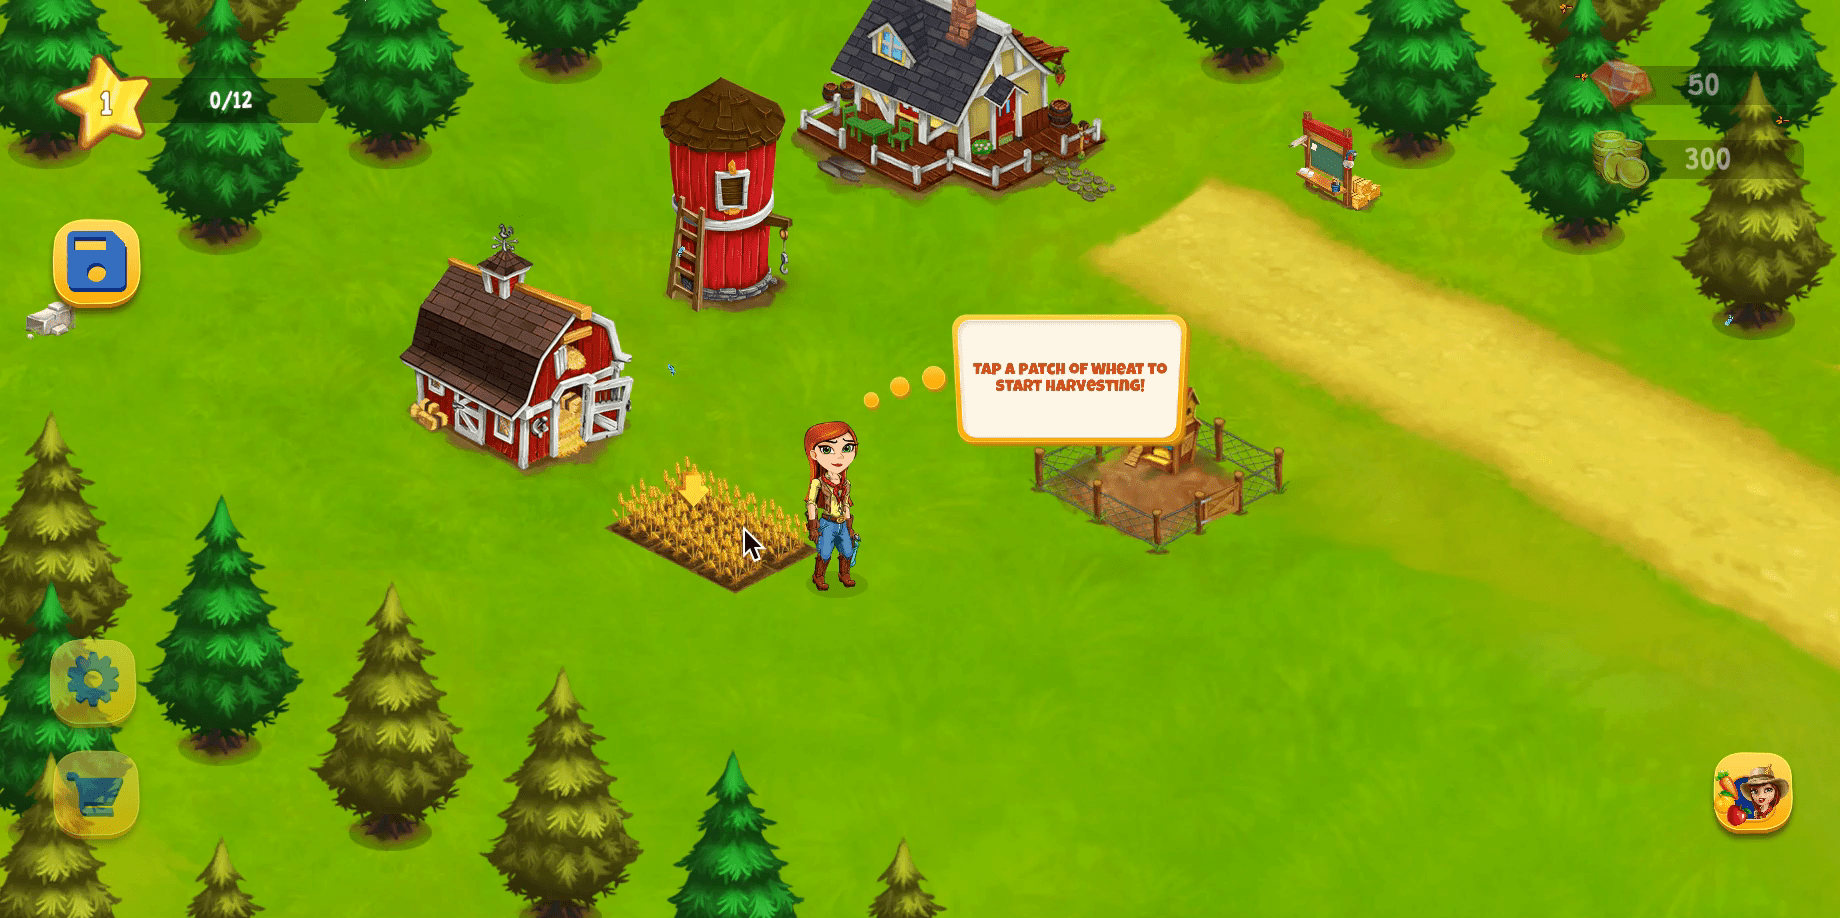 Farm Day Village Farming Game Screenshot 1